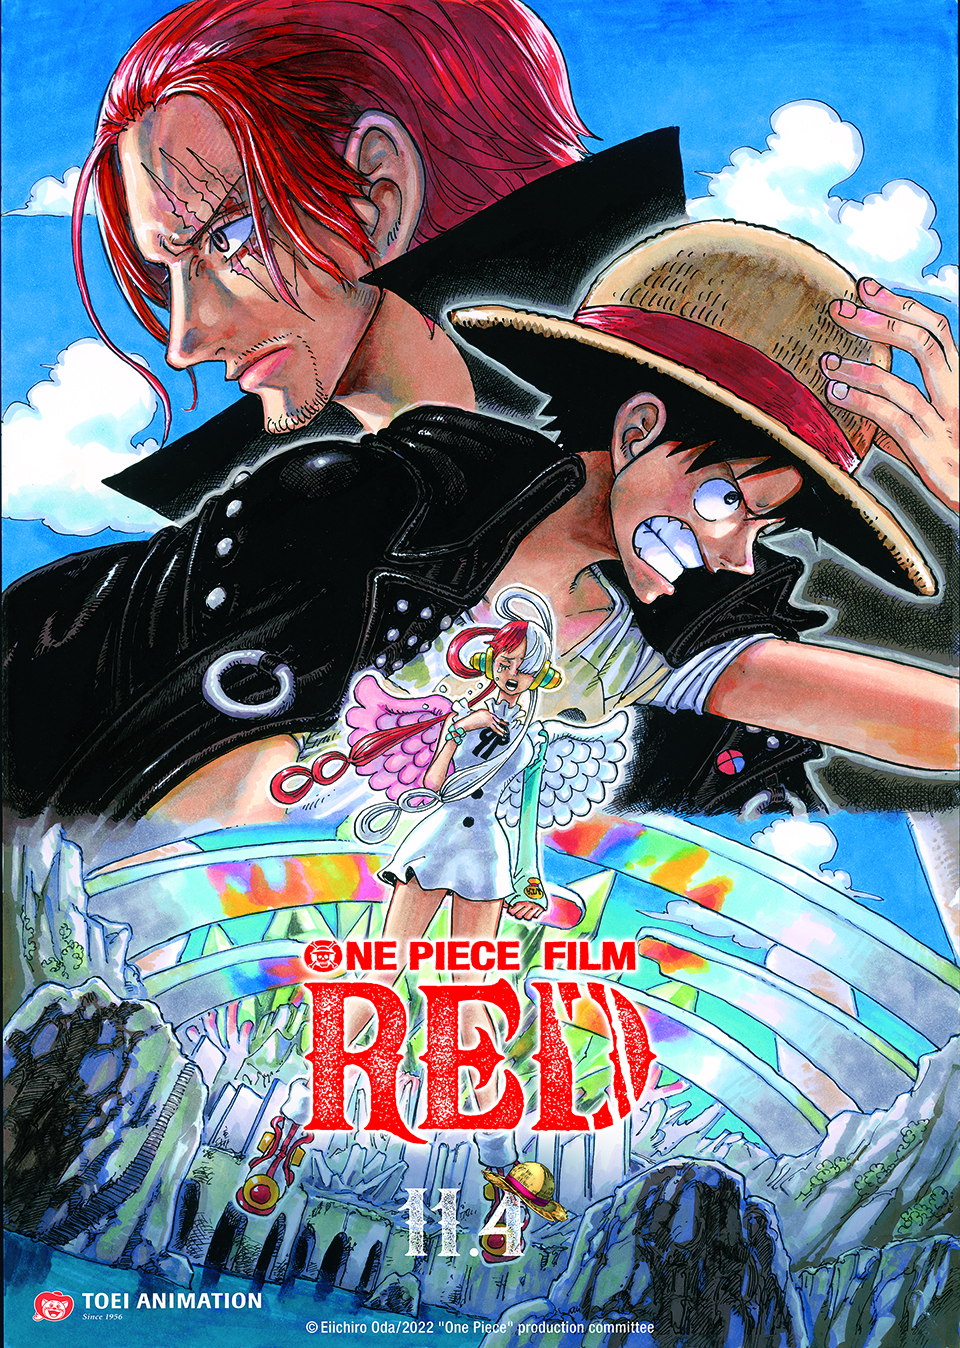 One Piece English Dub Now Streaming On Crunchyroll! #onepiece